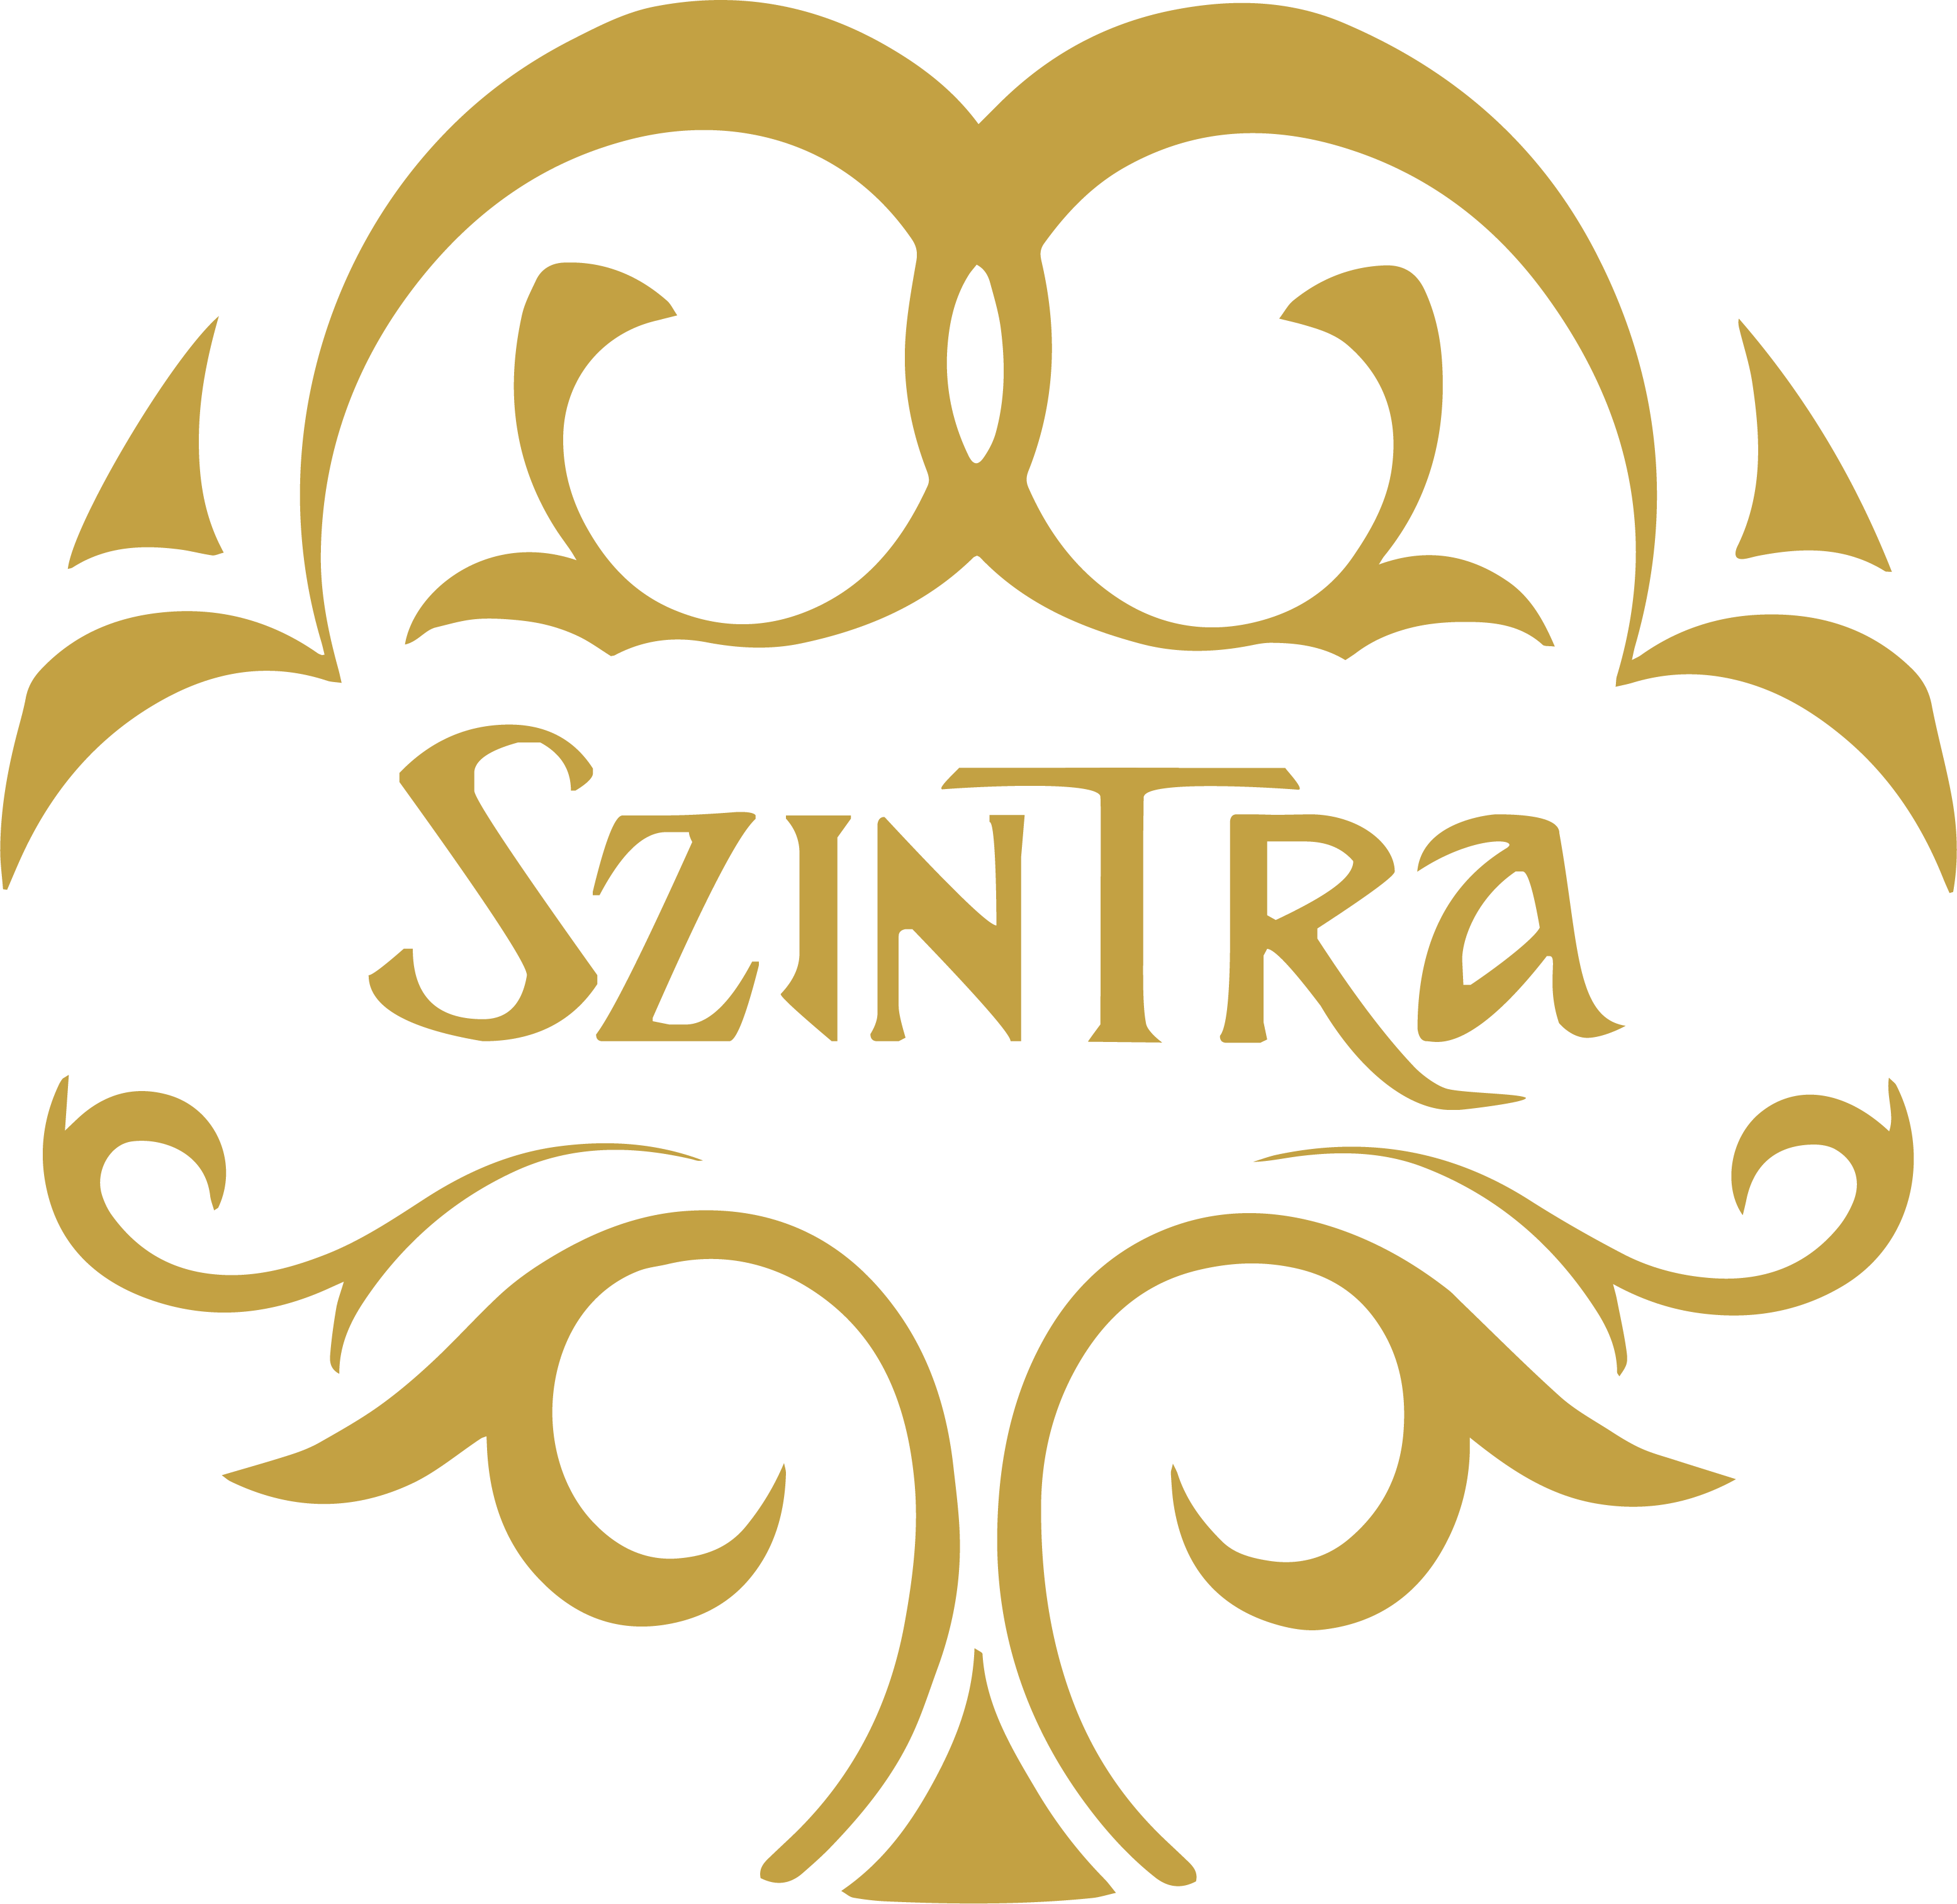 Szintra Music - where classic music meets fantasy